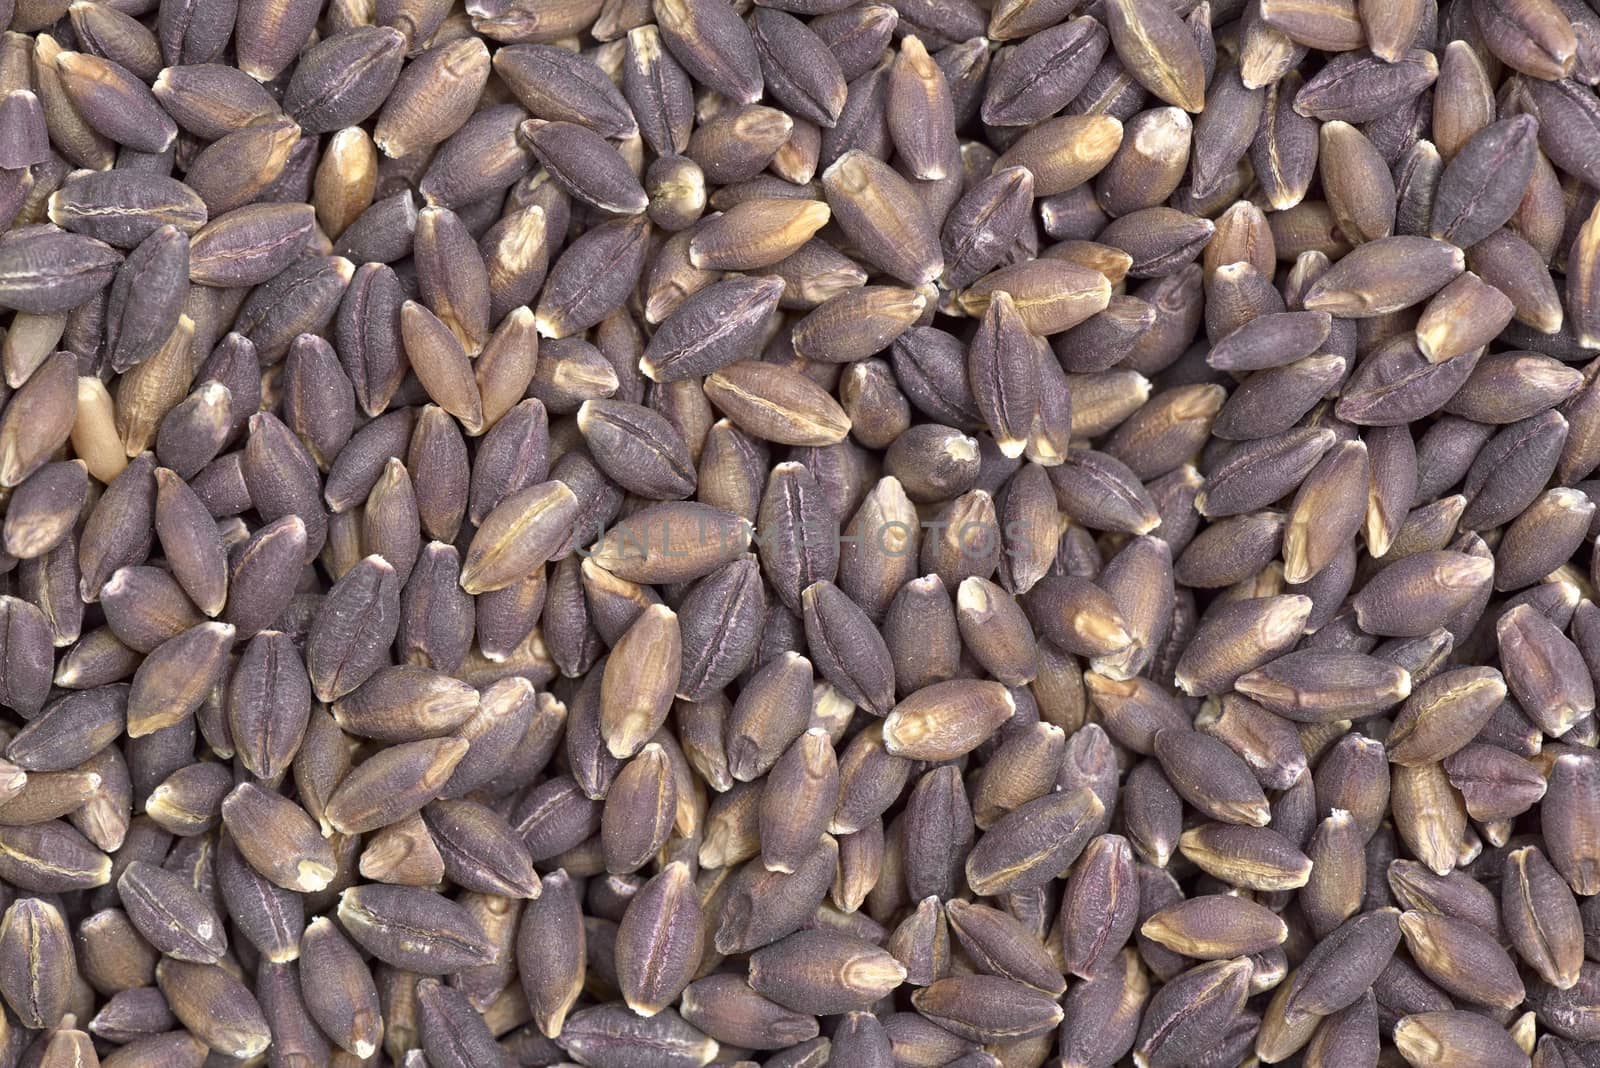 Purple Barley seeds by Hbak